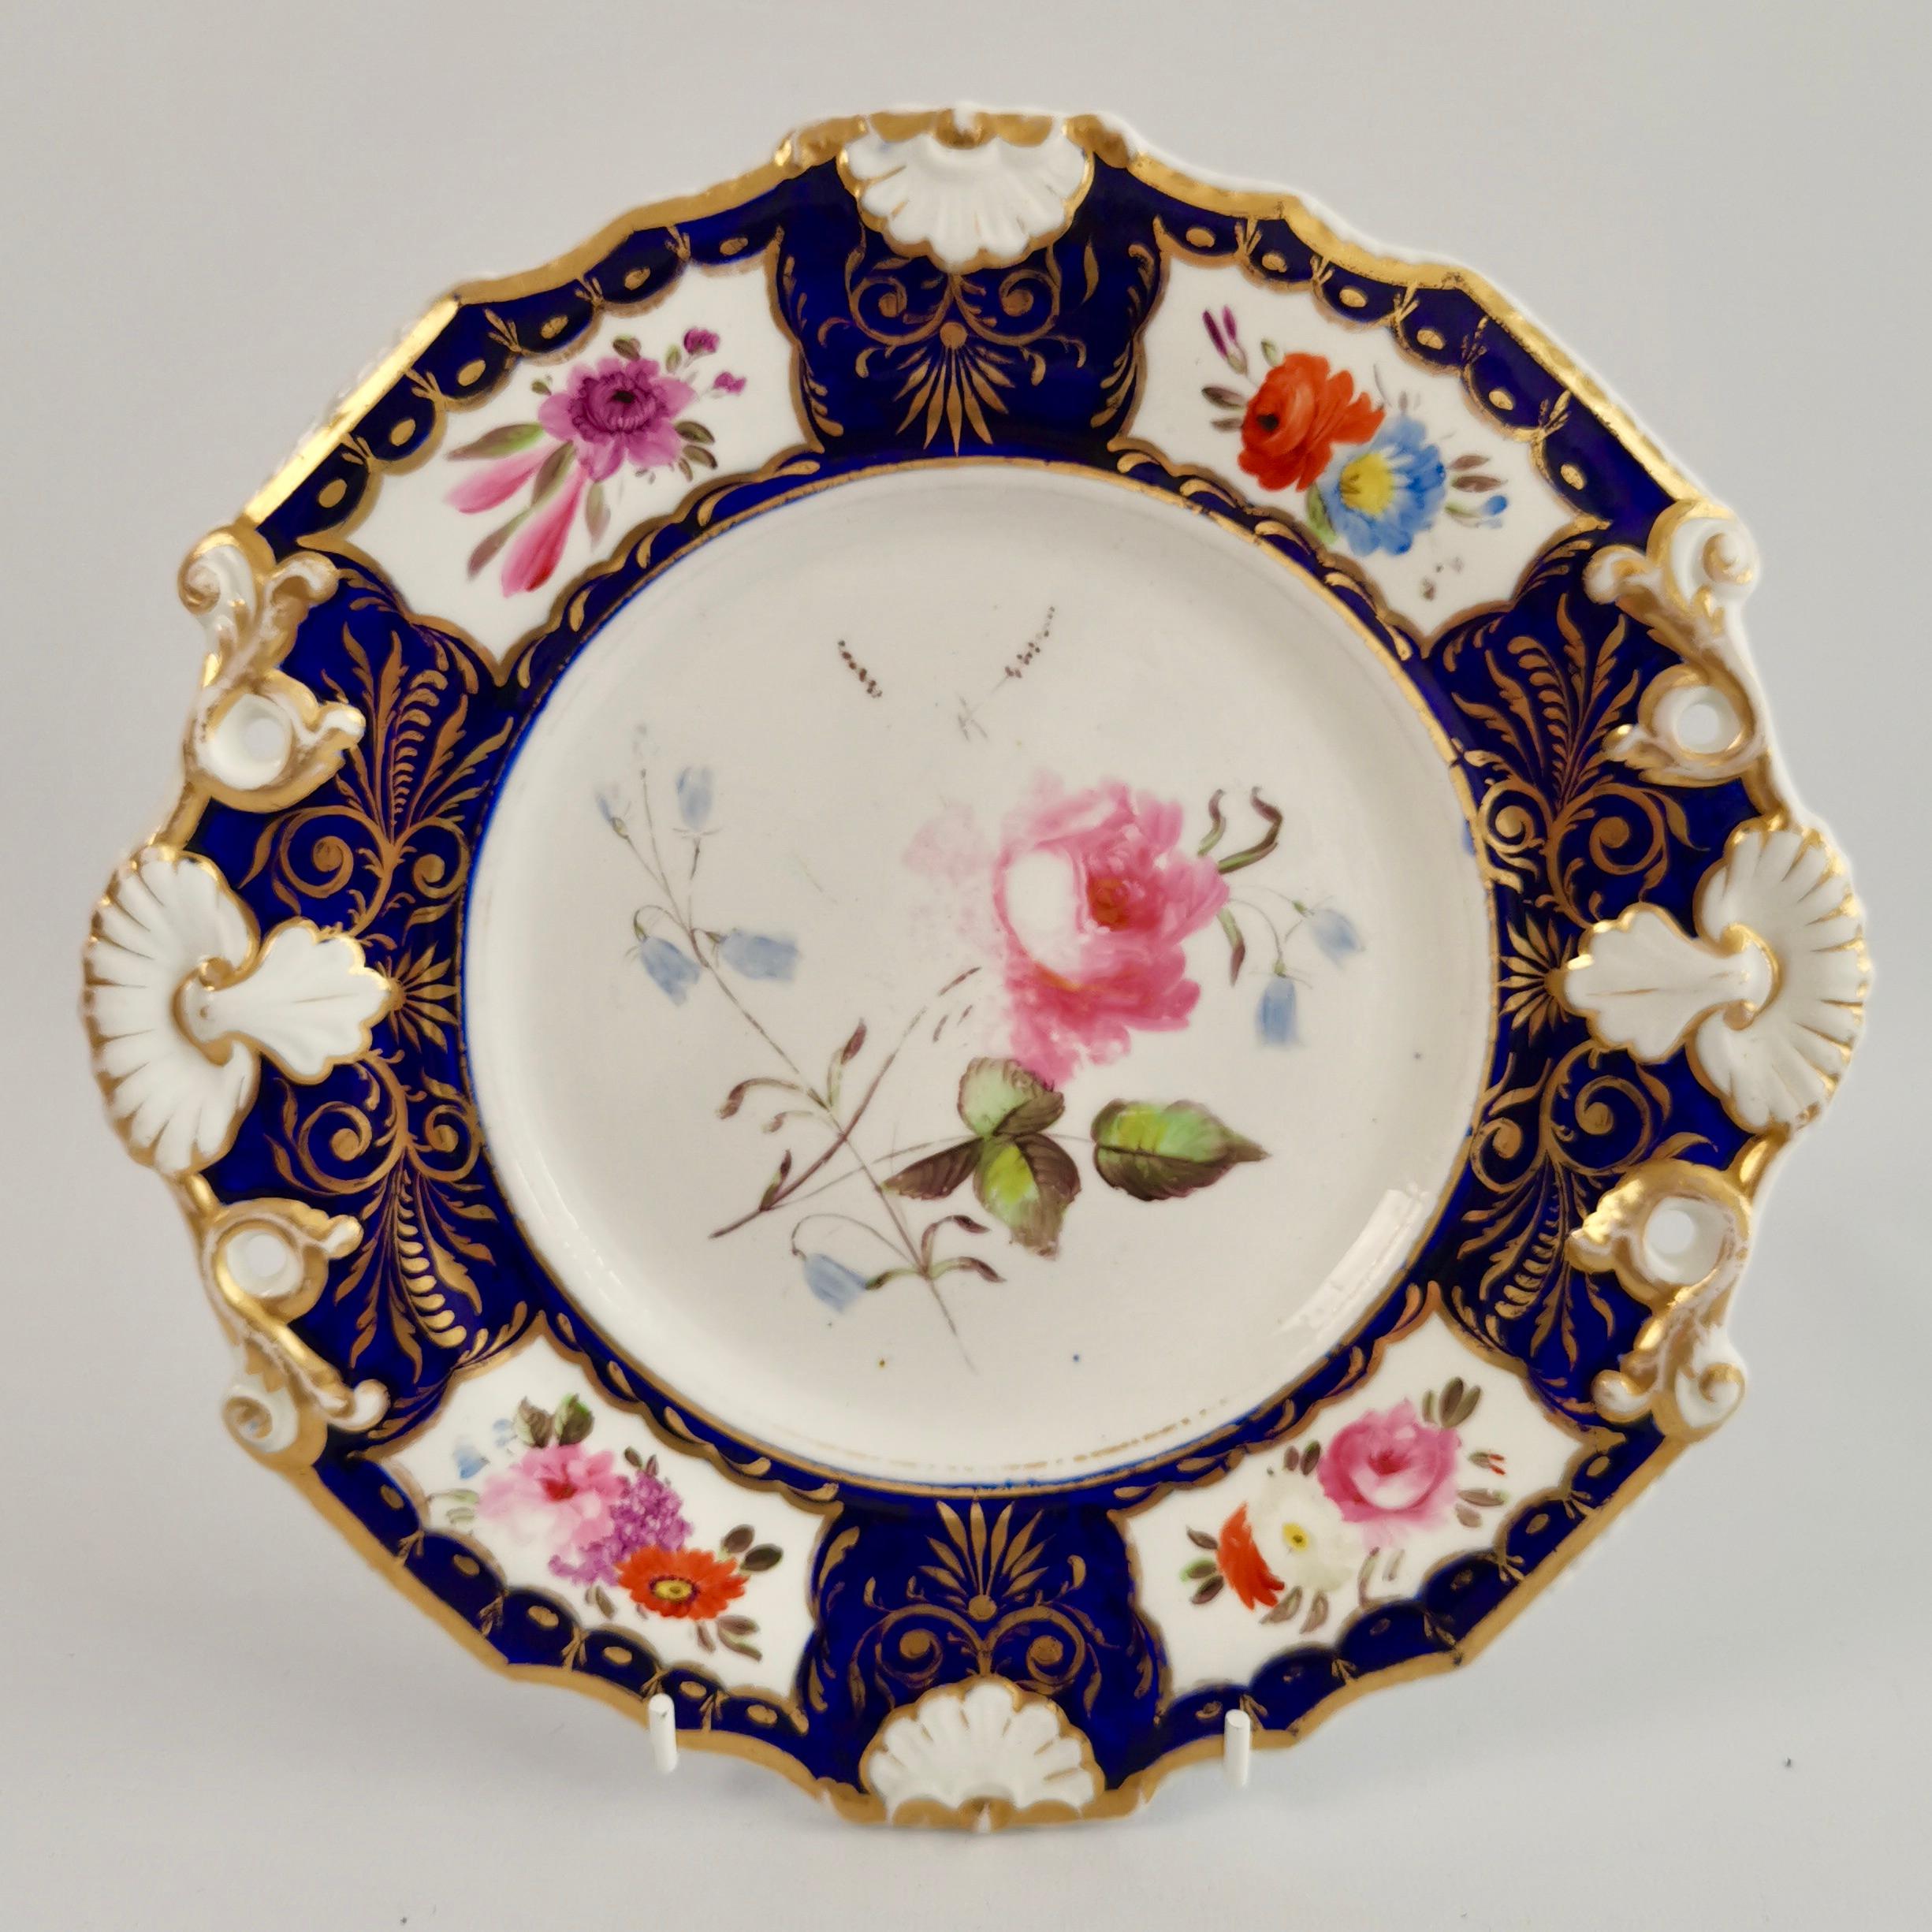 New Hall Porcelain Part Dessert Service, Cobalt Blue, Flowers, Regency 1824-1830 5